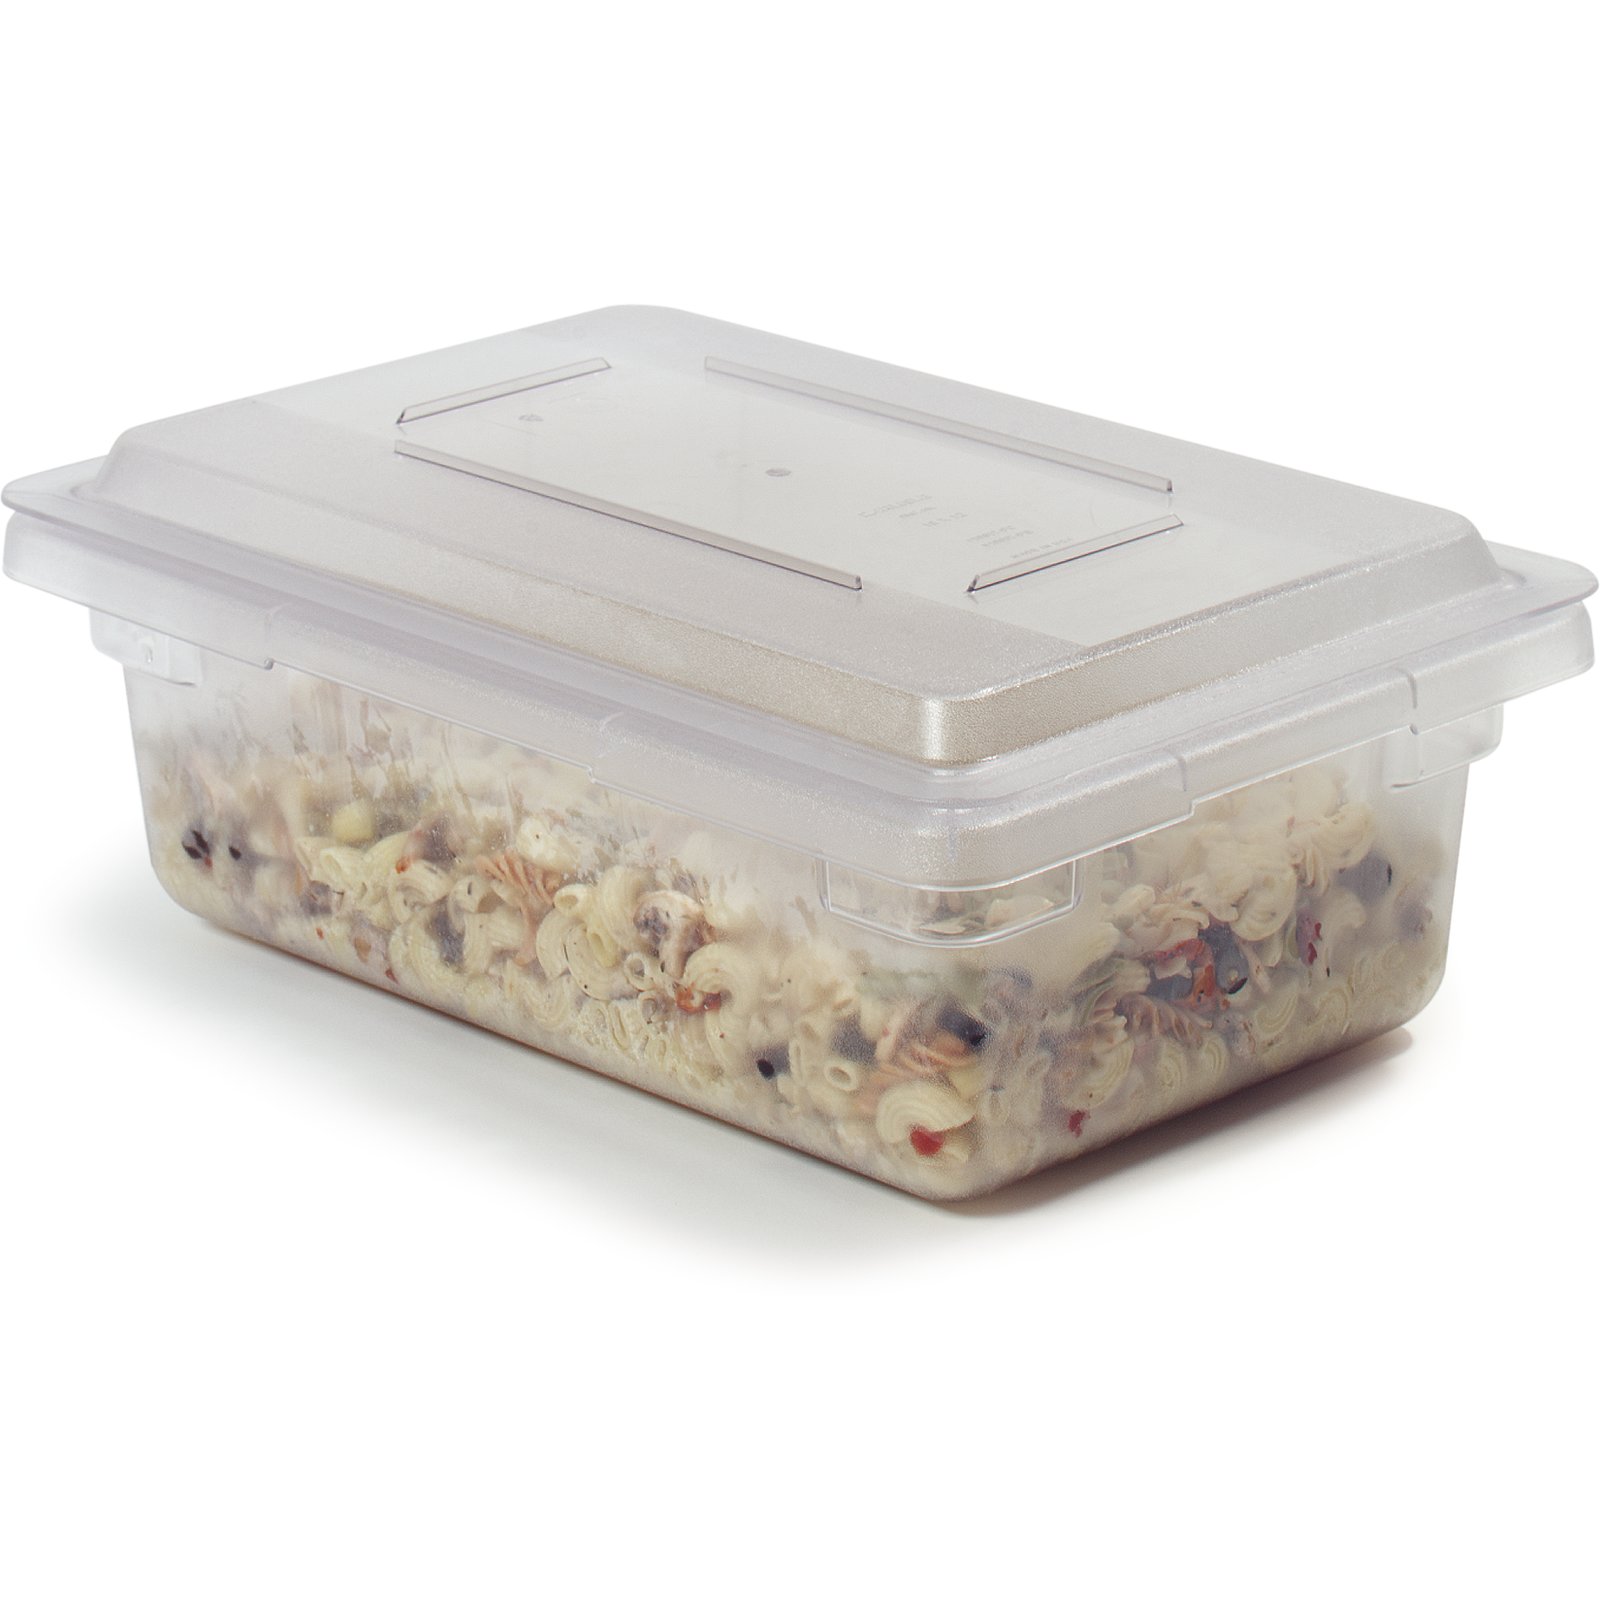 1062307 - StorPlus™ Polycarbonate Food Storage Container 16.6 gal